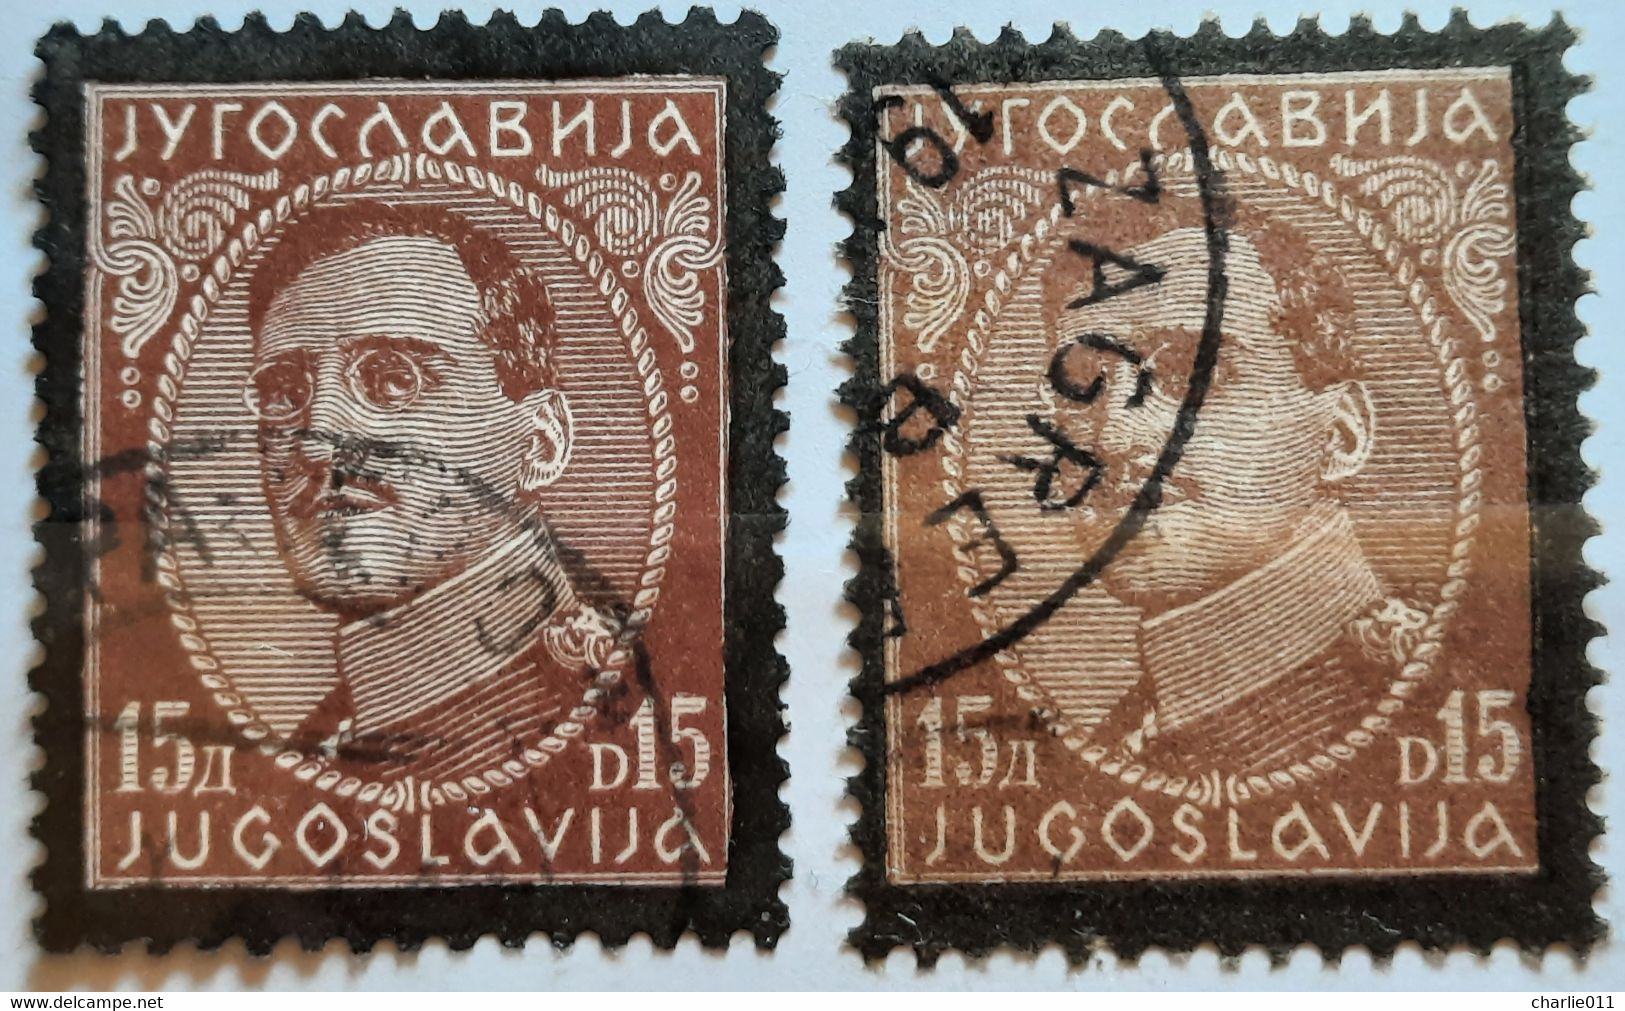 KING ALEXANDER-15 D-BLACK OVERPRINT-VARIATION-YUGOSLAVIA-1934 - Imperforates, Proofs & Errors